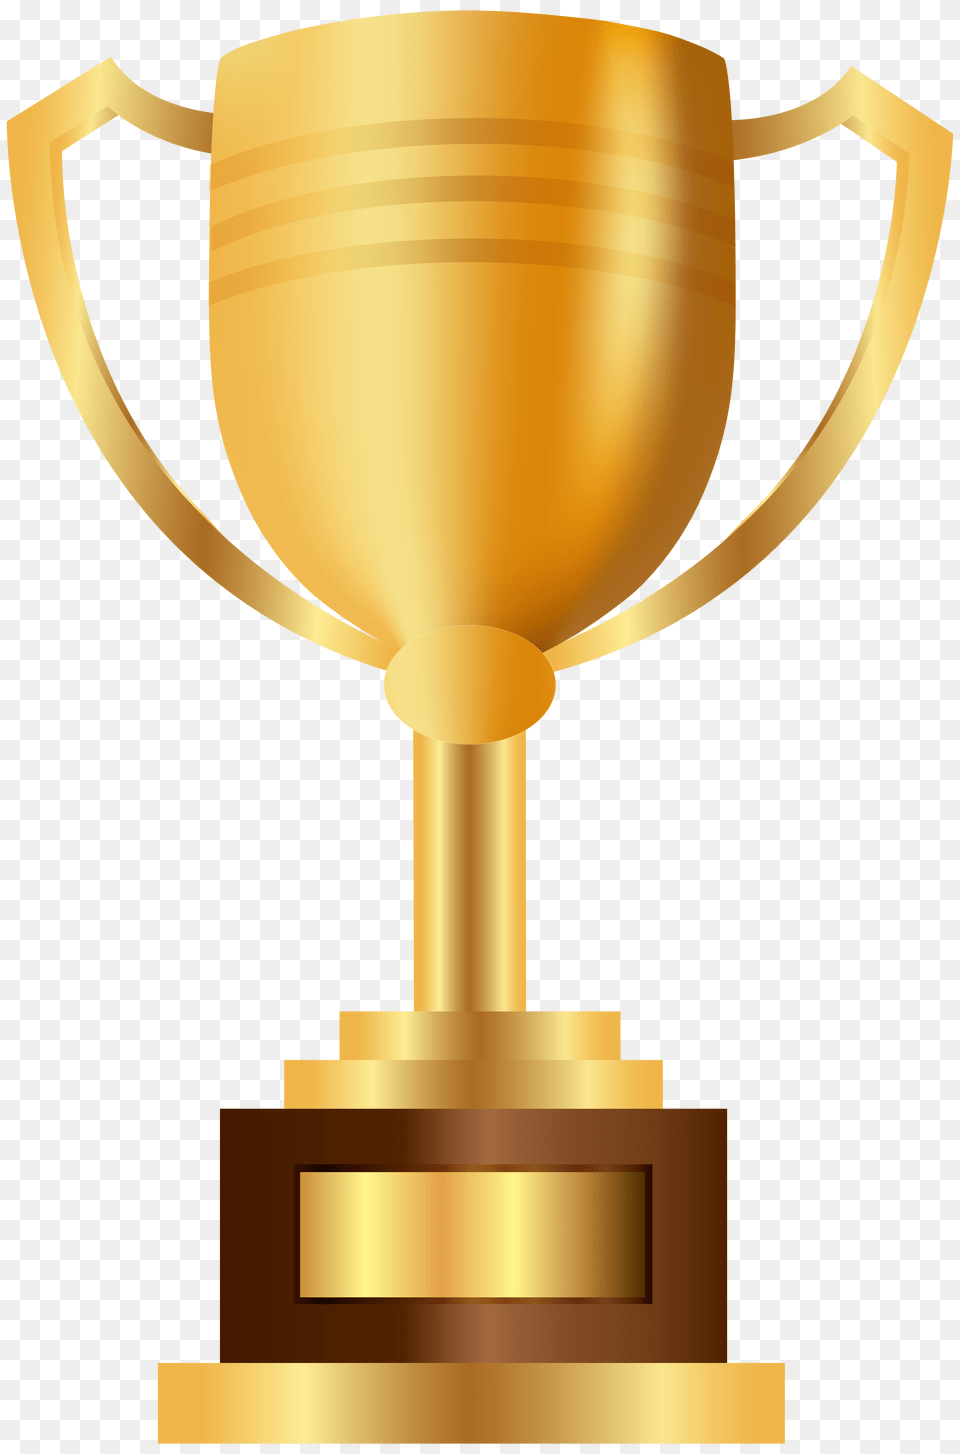 Gold Prize Cup Transparent Clip, Trophy Png Image